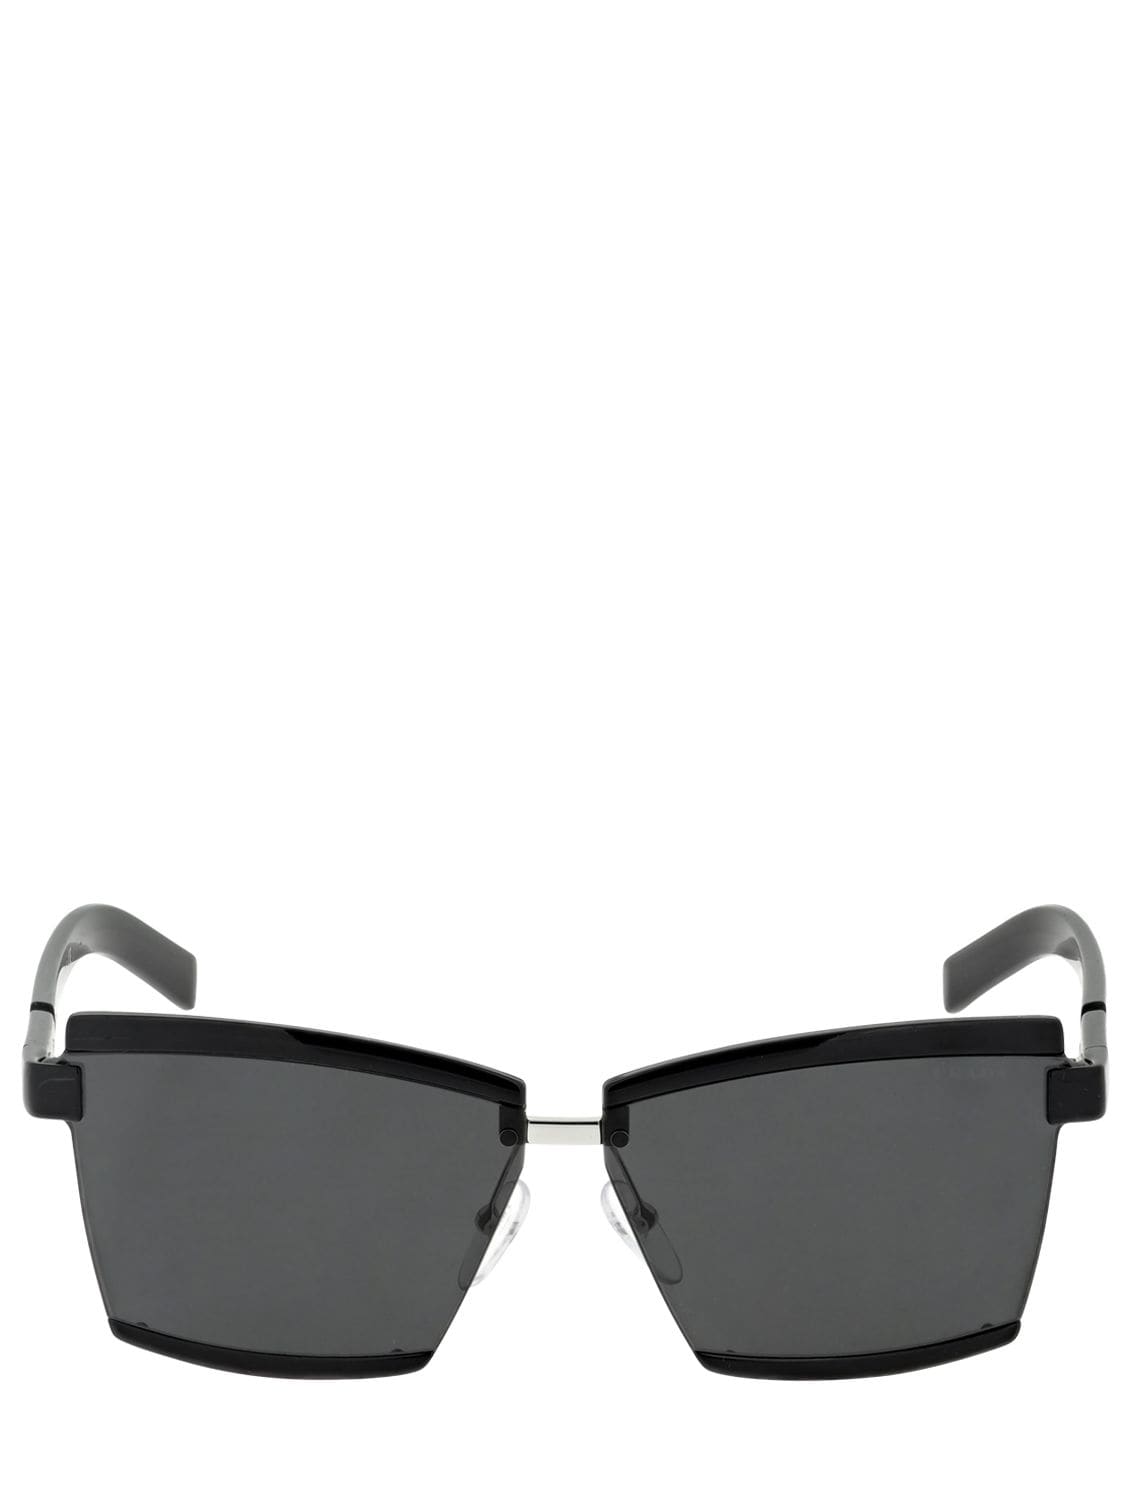 Prada Butterfly Metal Sunglasses In Black